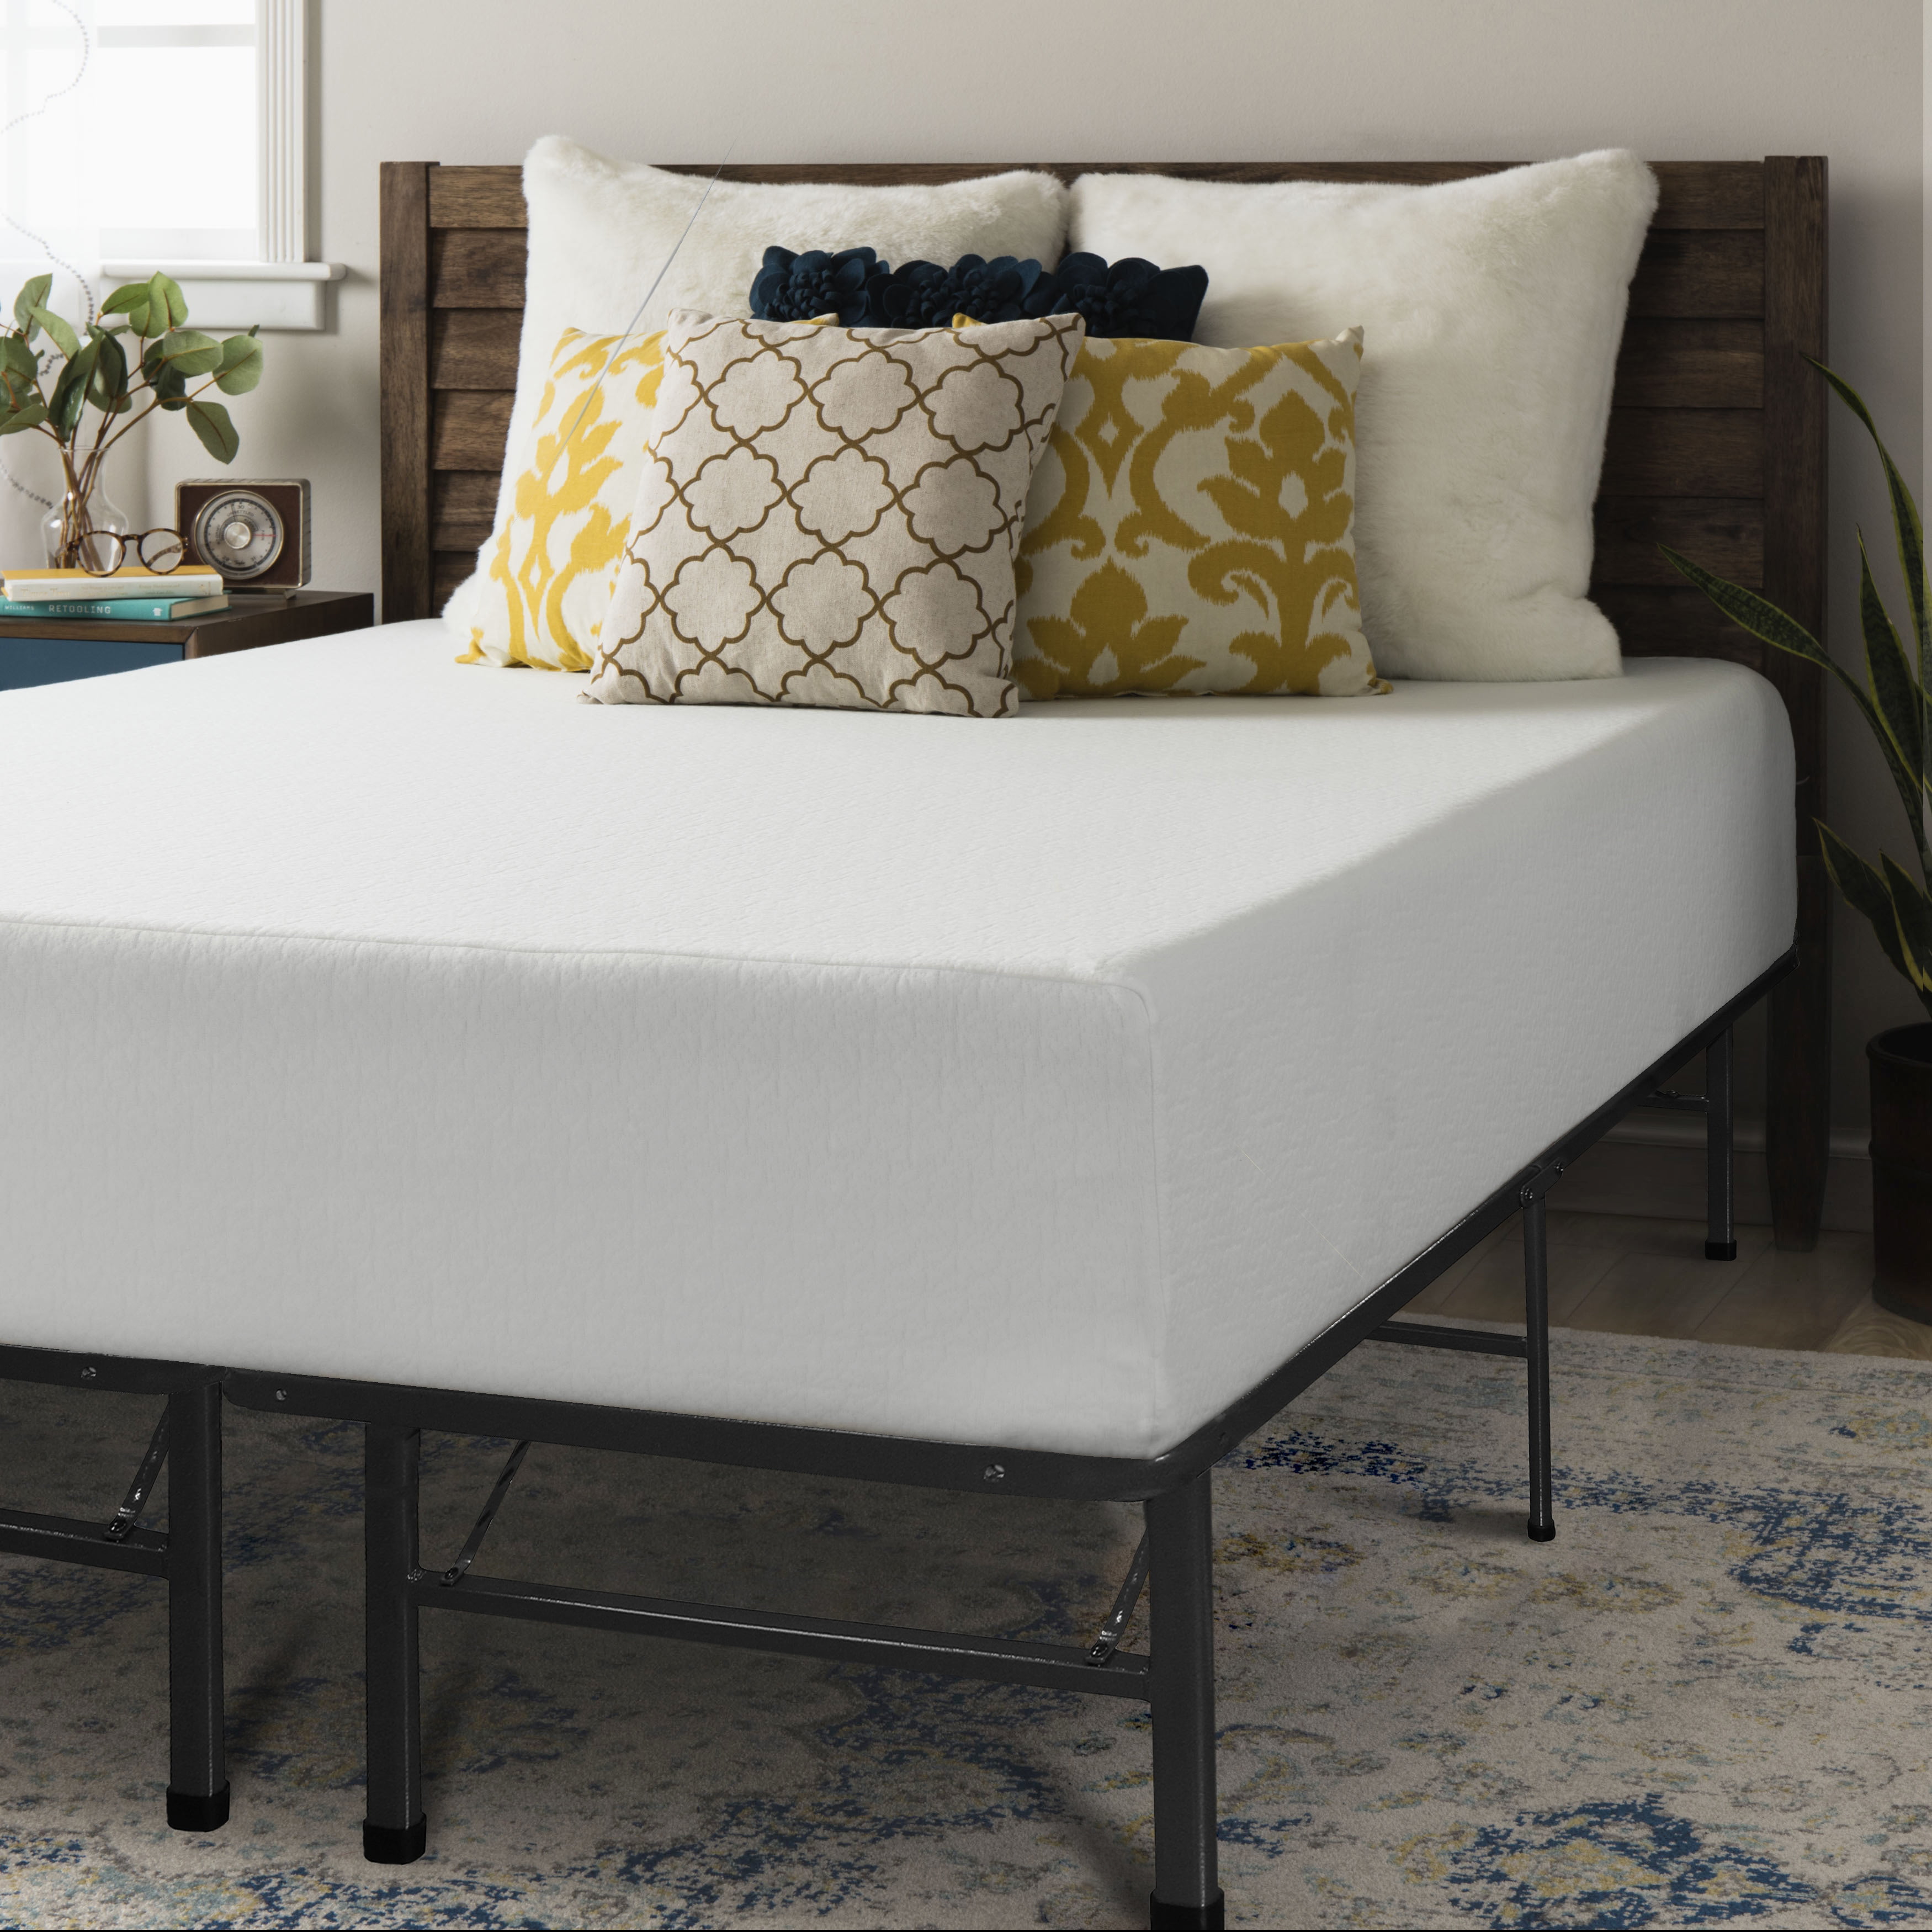 bed and foam mattress